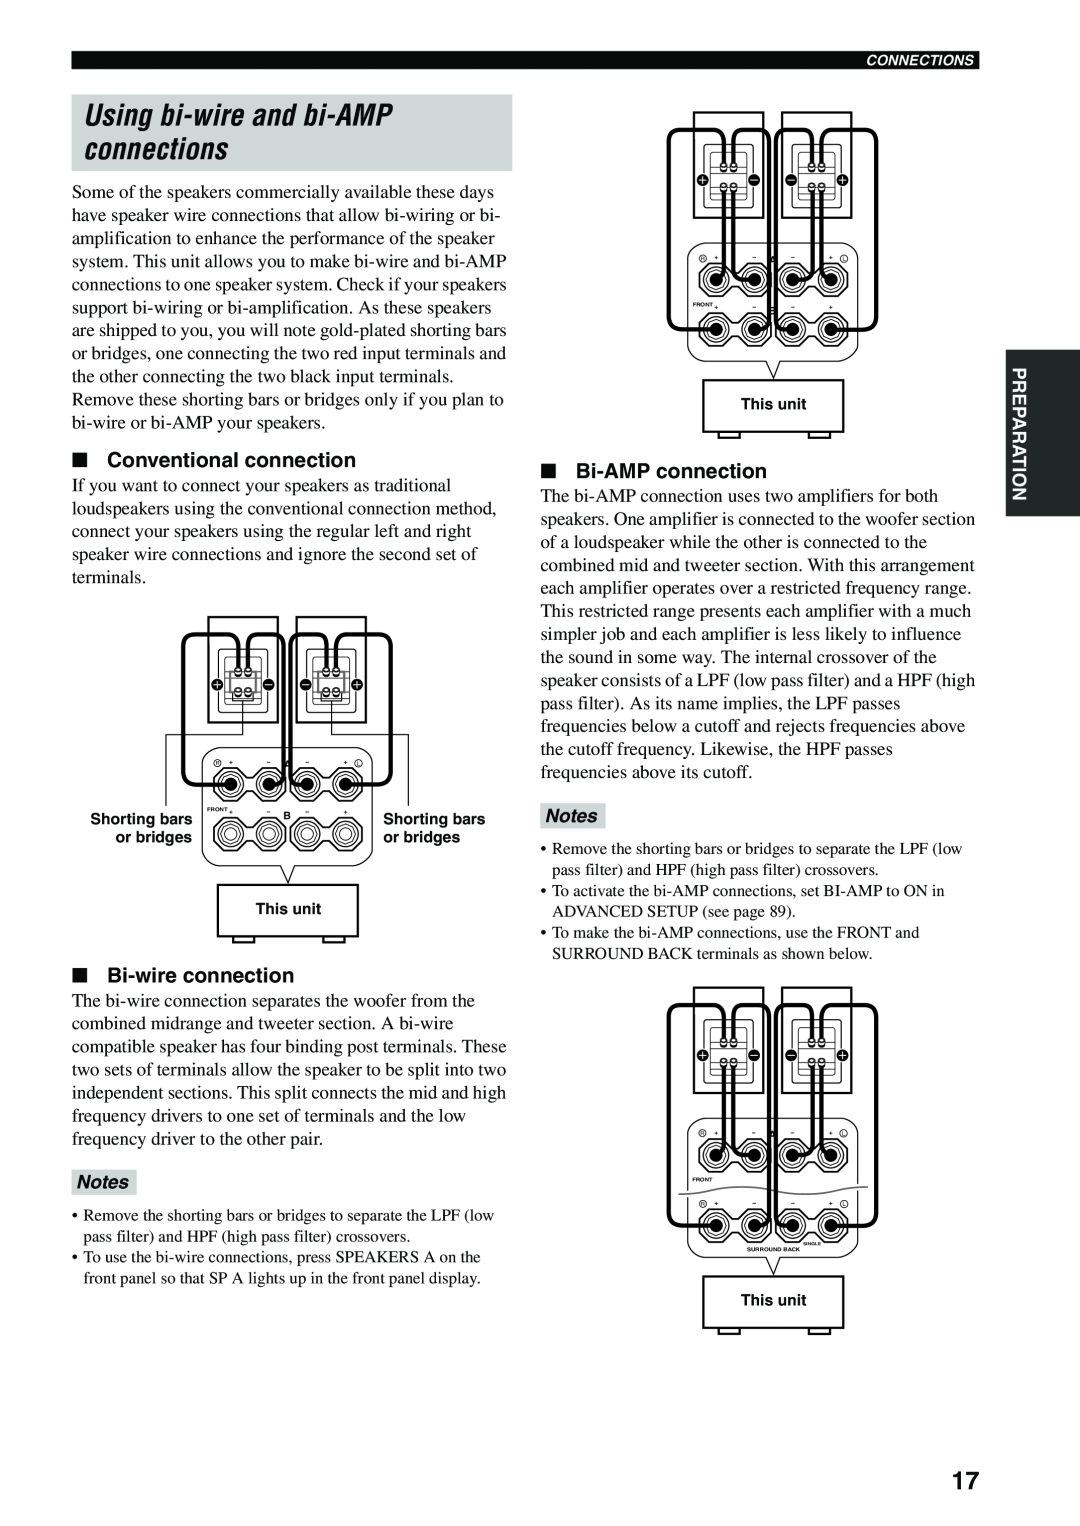 Yamaha HTR-5990 Using bi-wireand bi-AMPconnections, Conventional connection, Bi-wireconnection, Bi-AMPconnection, Notes 